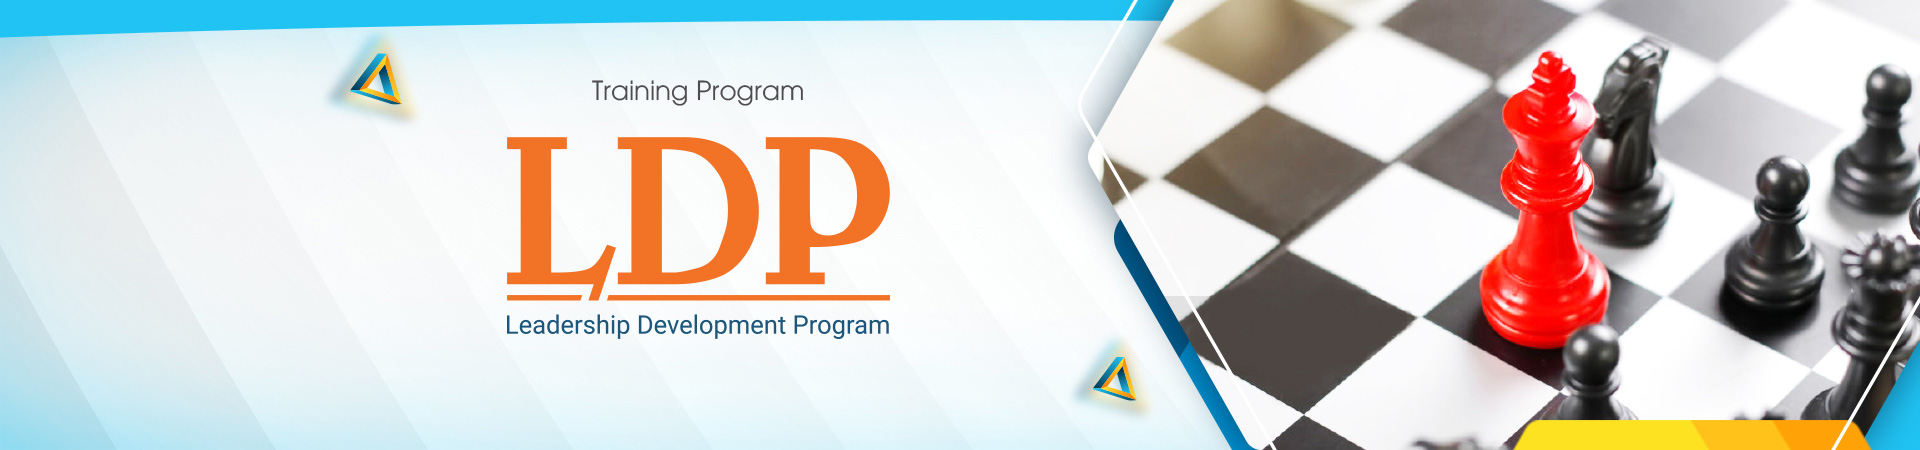 LDP - Leadership Development Program